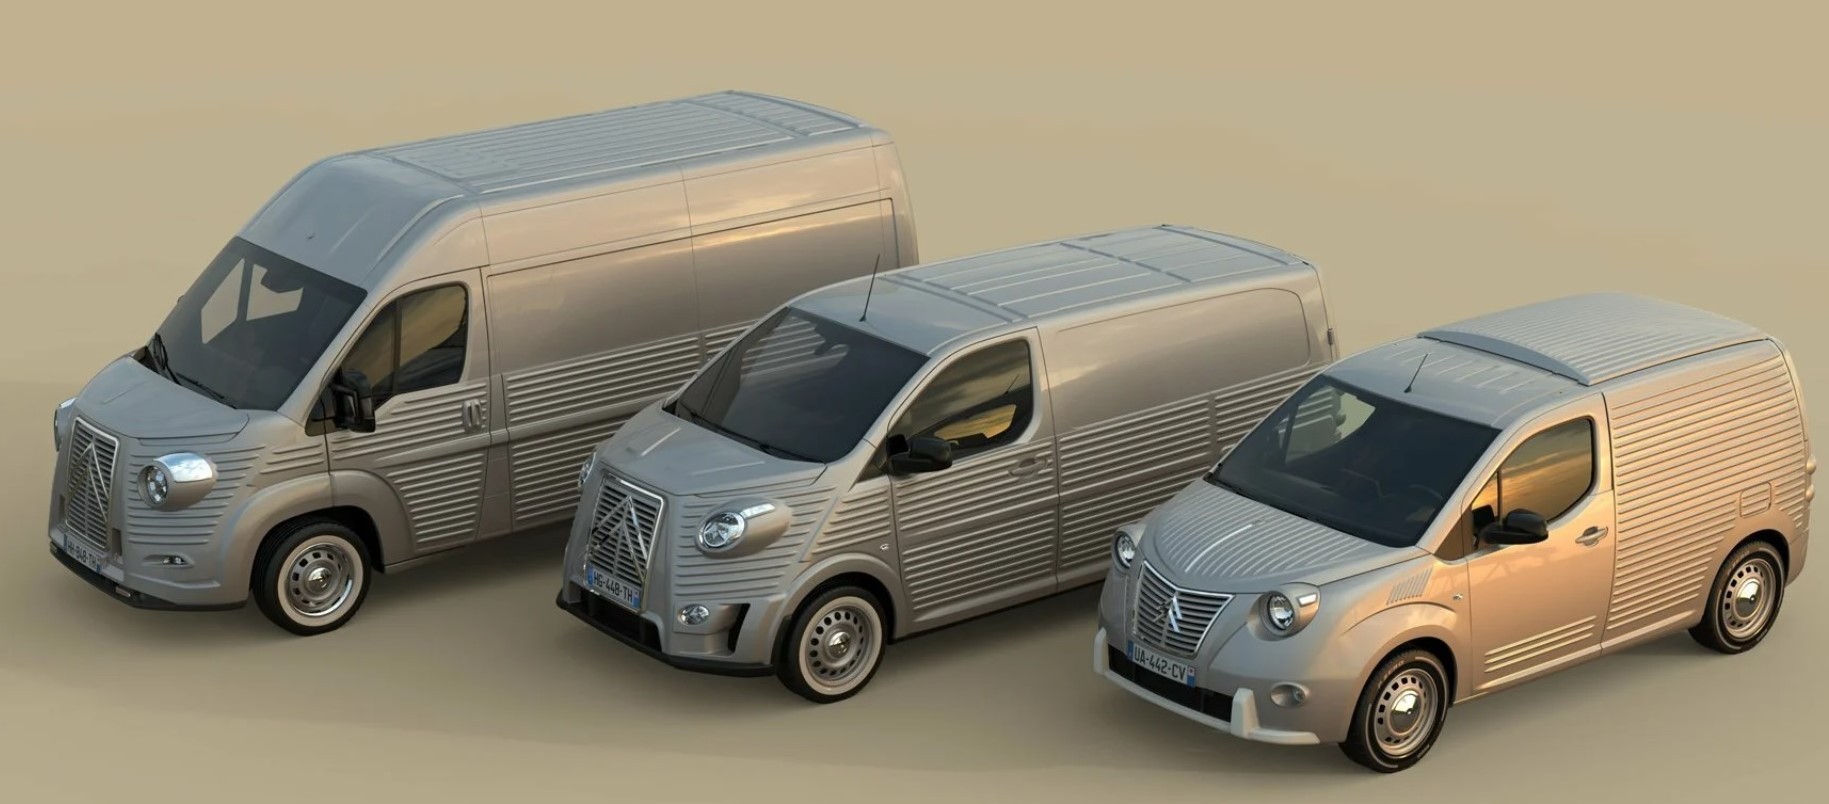 Citroen Berlingo 2CV Fourgonnette Debuts With Retro Look For Modern Van